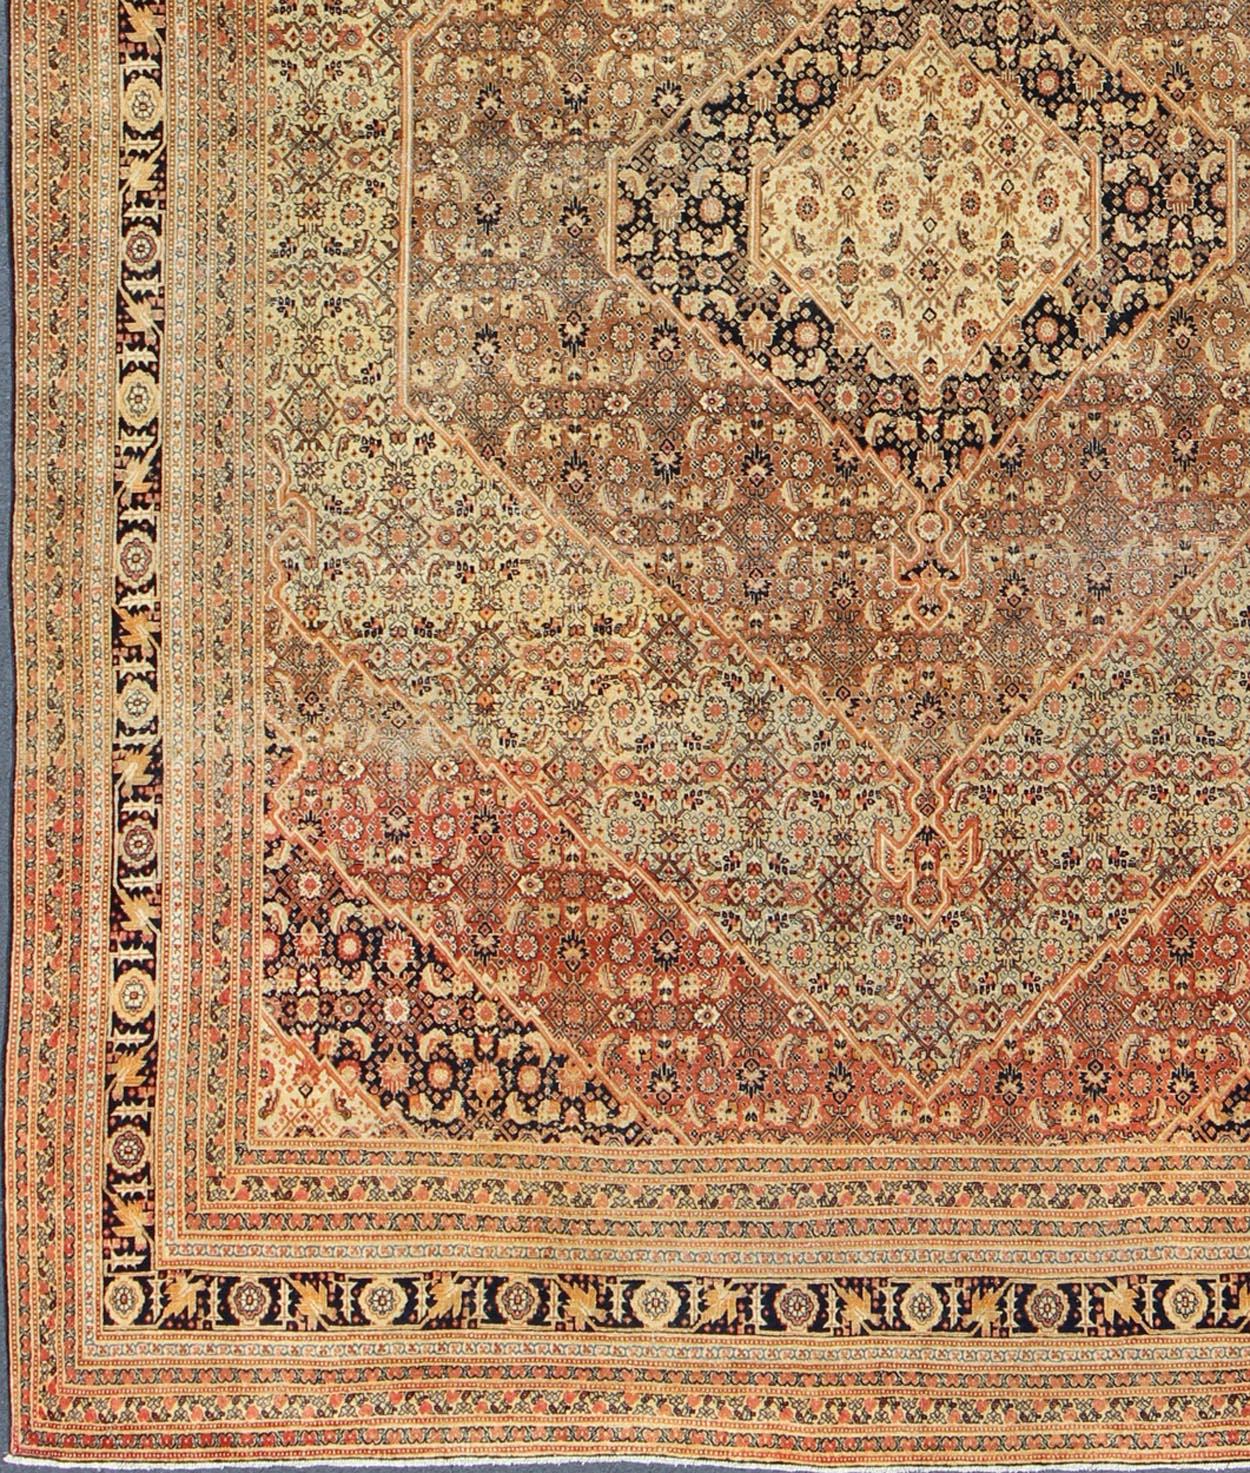 Antique Tabriz Haji-Jalili rug with diamond design rendered in floral motifs. Keivan Woven Arts / rug TU-ALK-4882, country of origin / type: Iran / Tabriz, circa 1880.
Measures: 9'9 x 12'8.
This magnificent antique Persian Tabriz carpet from late